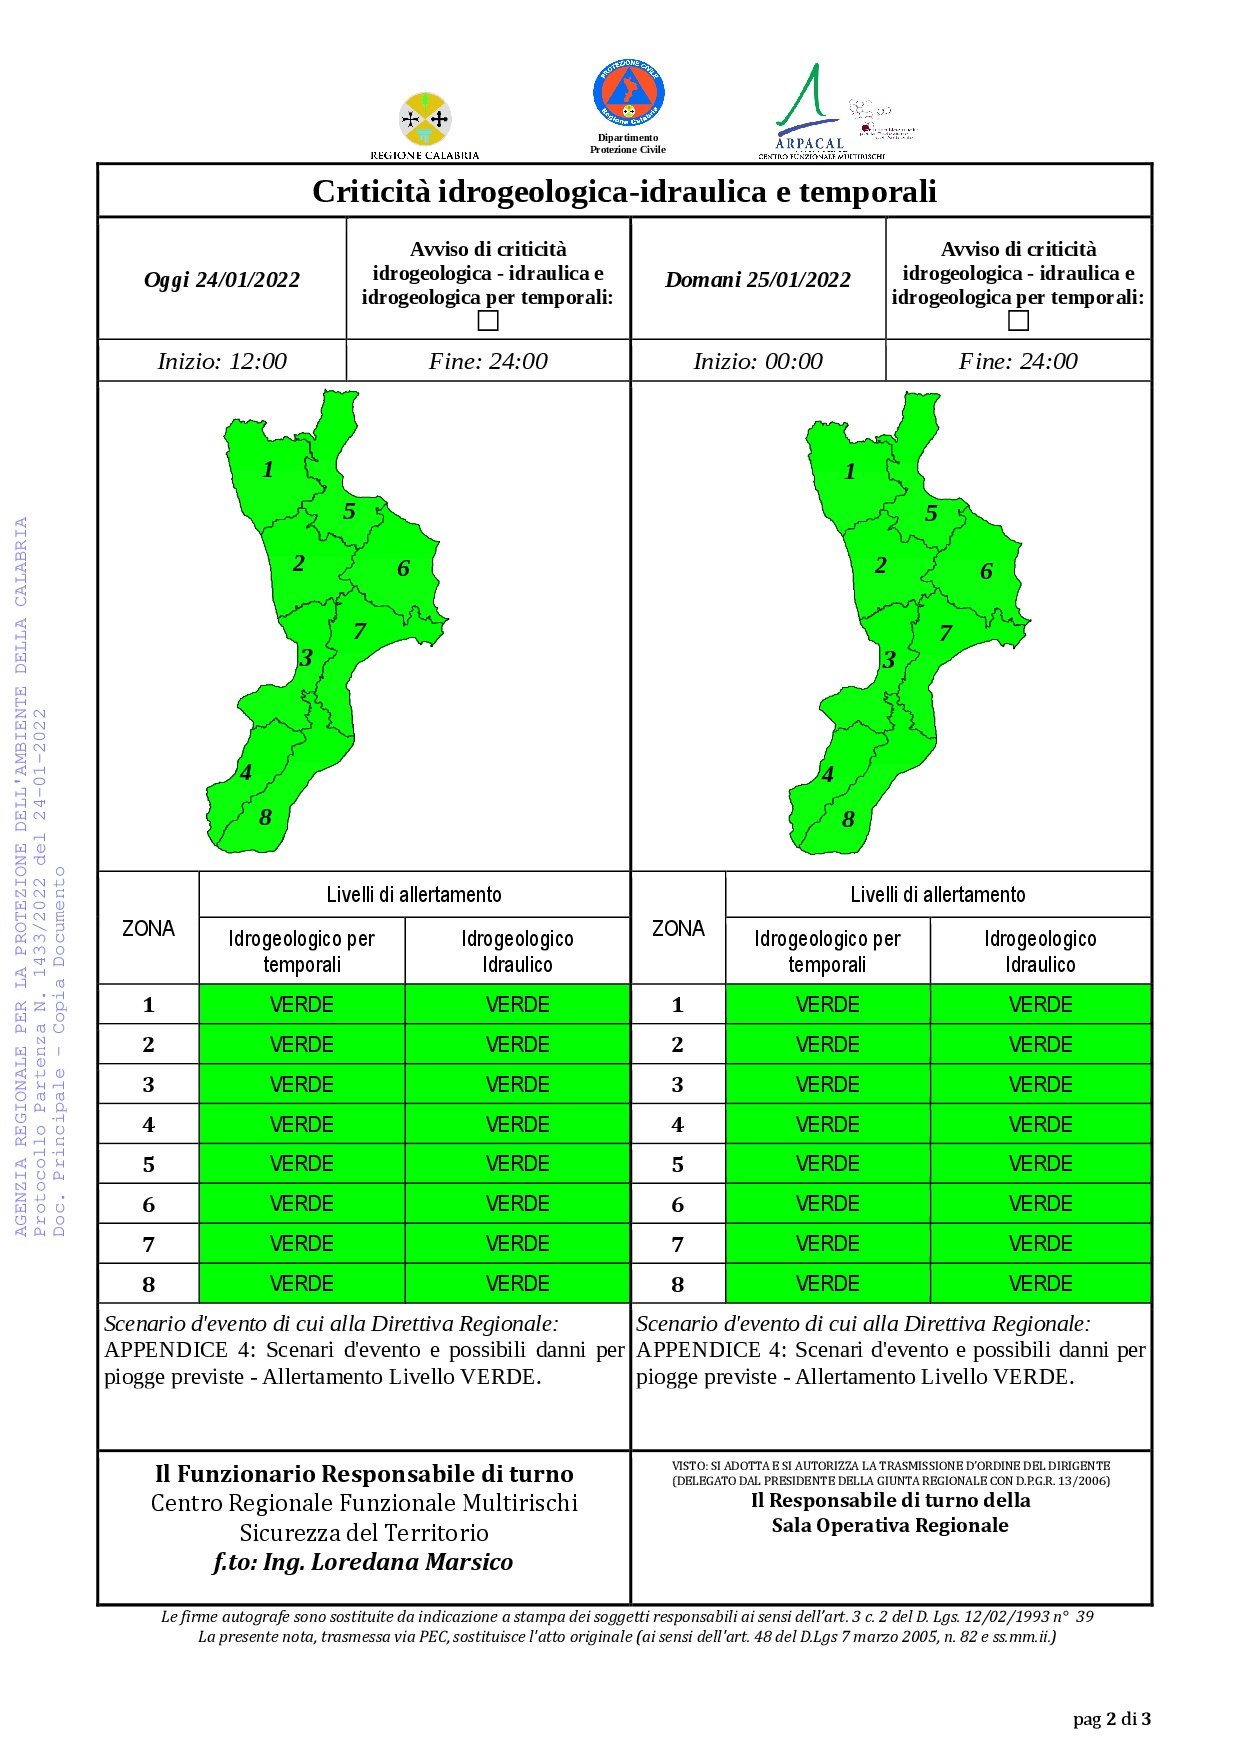 Criticità idrogeologica-idraulica e temporali in Calabria 24-01-2022